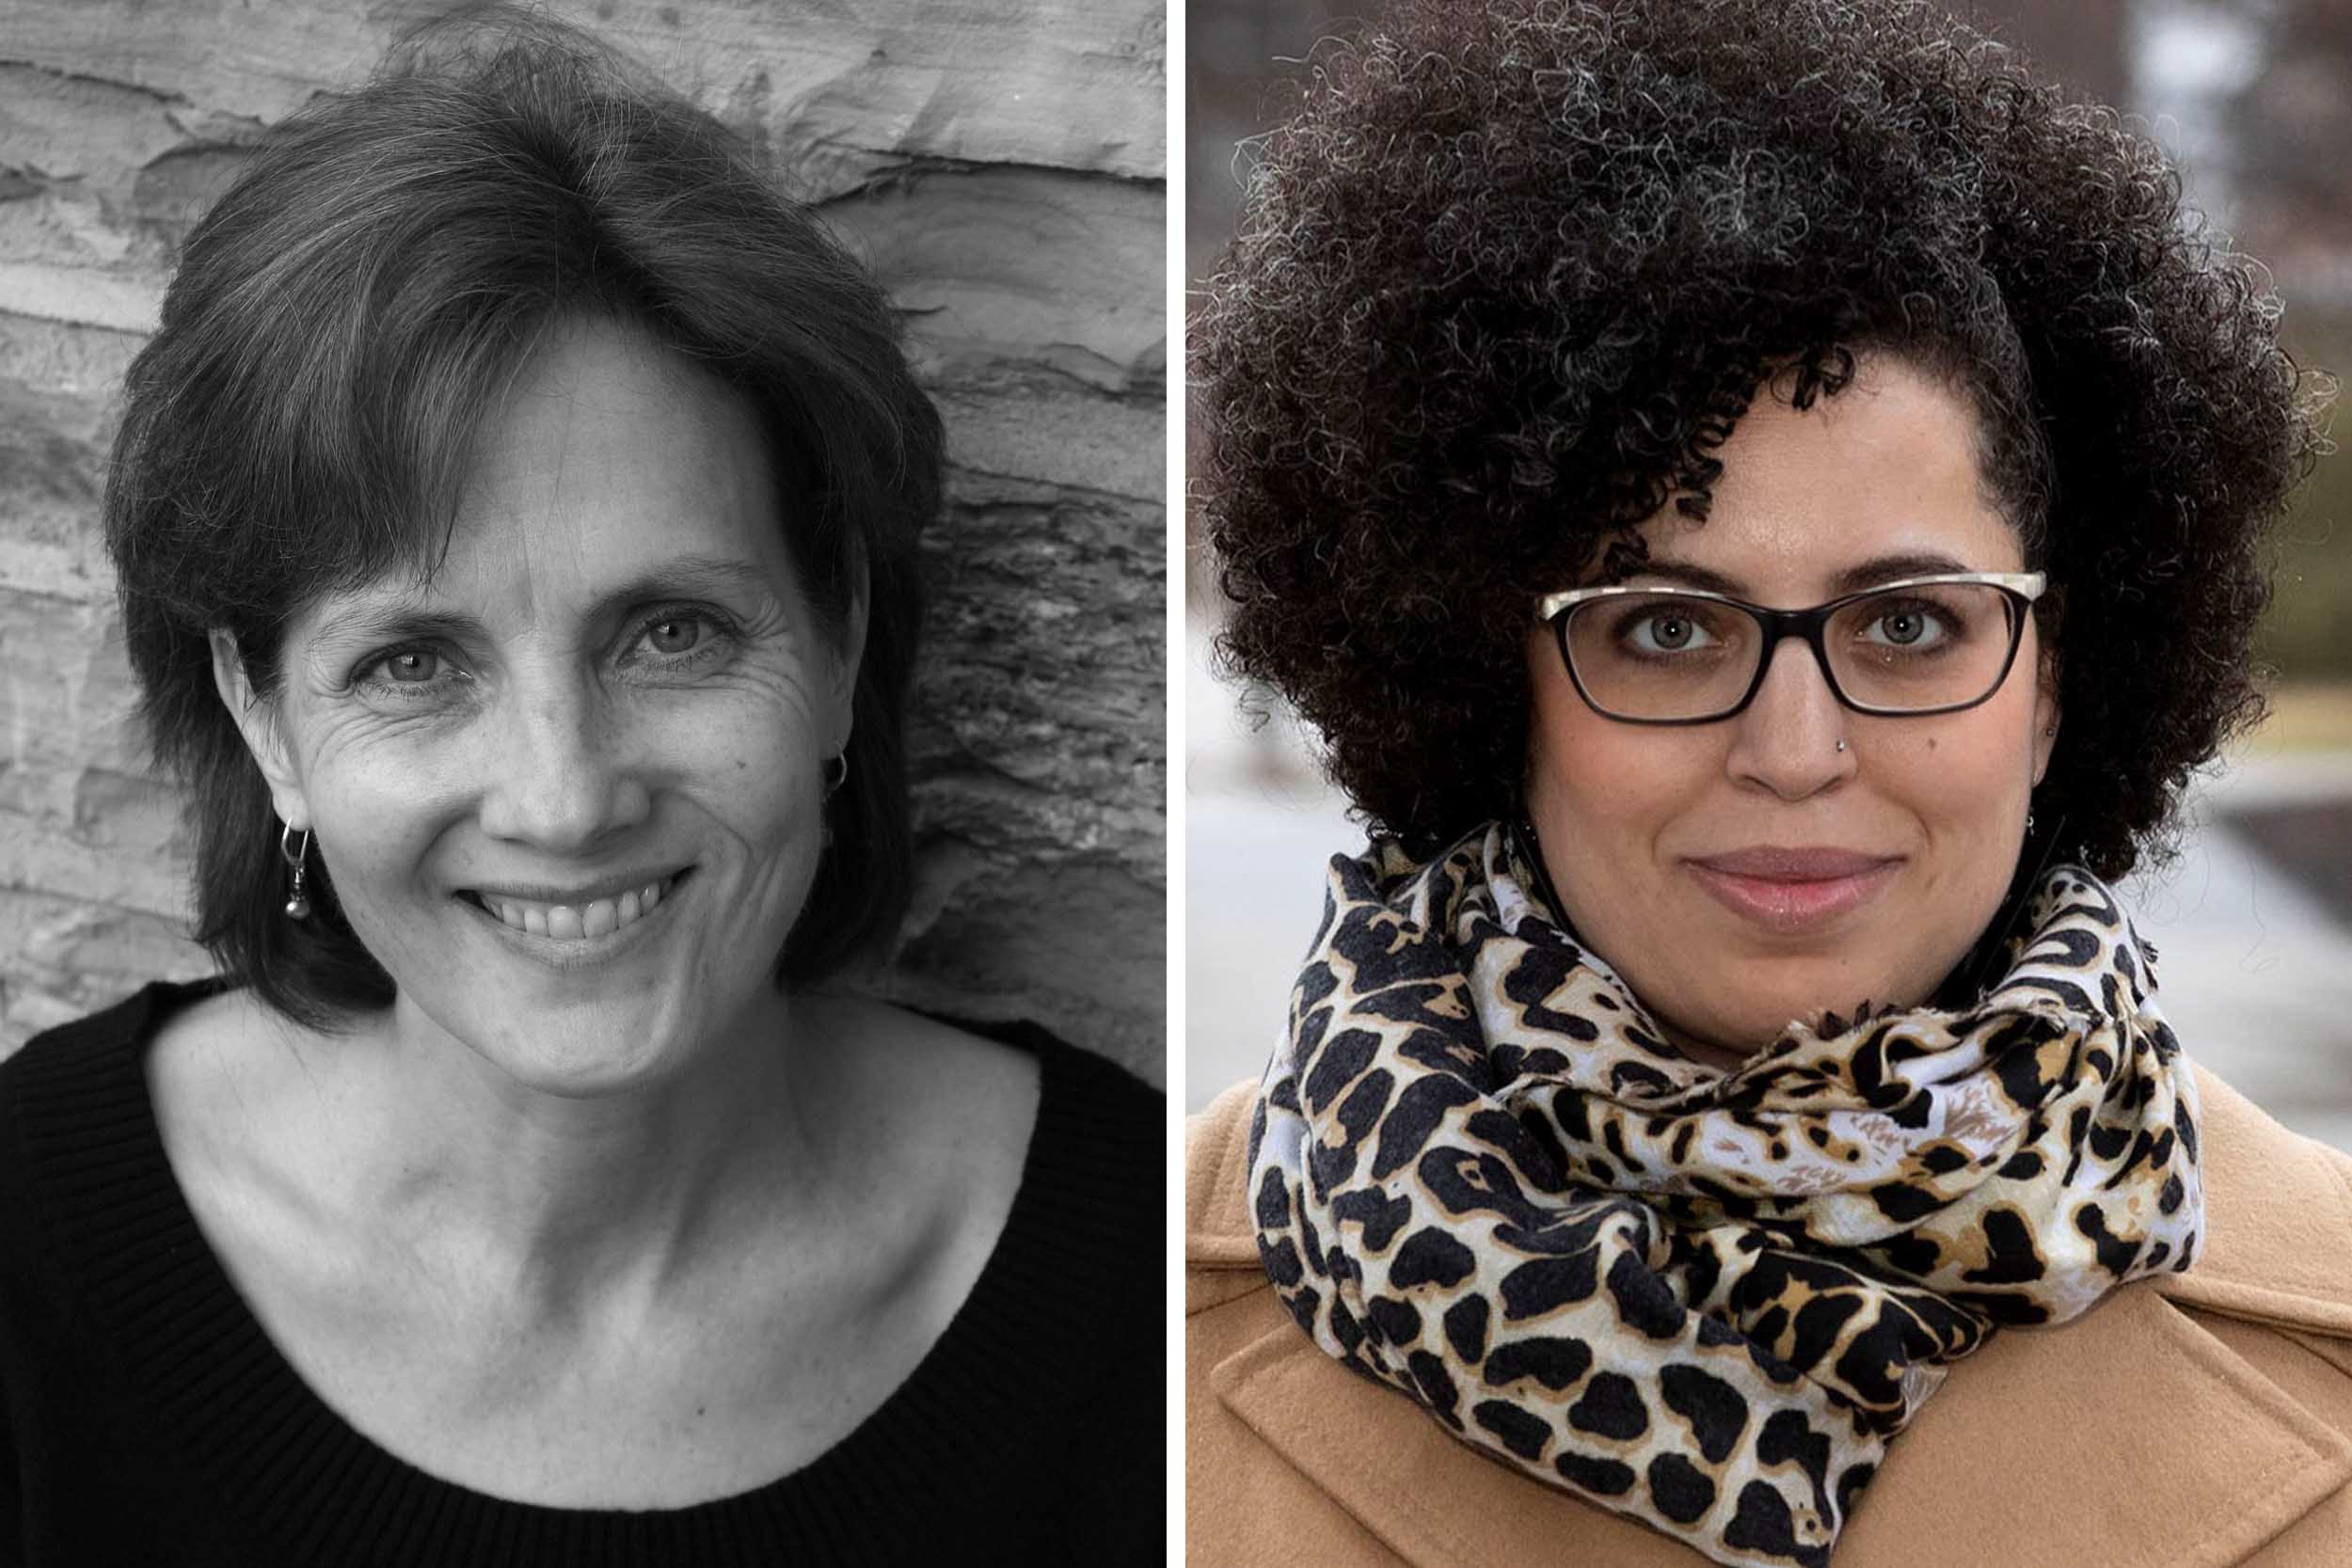 English professors headshots: Debra Nystrom, left, and Kiki Petrosino, right